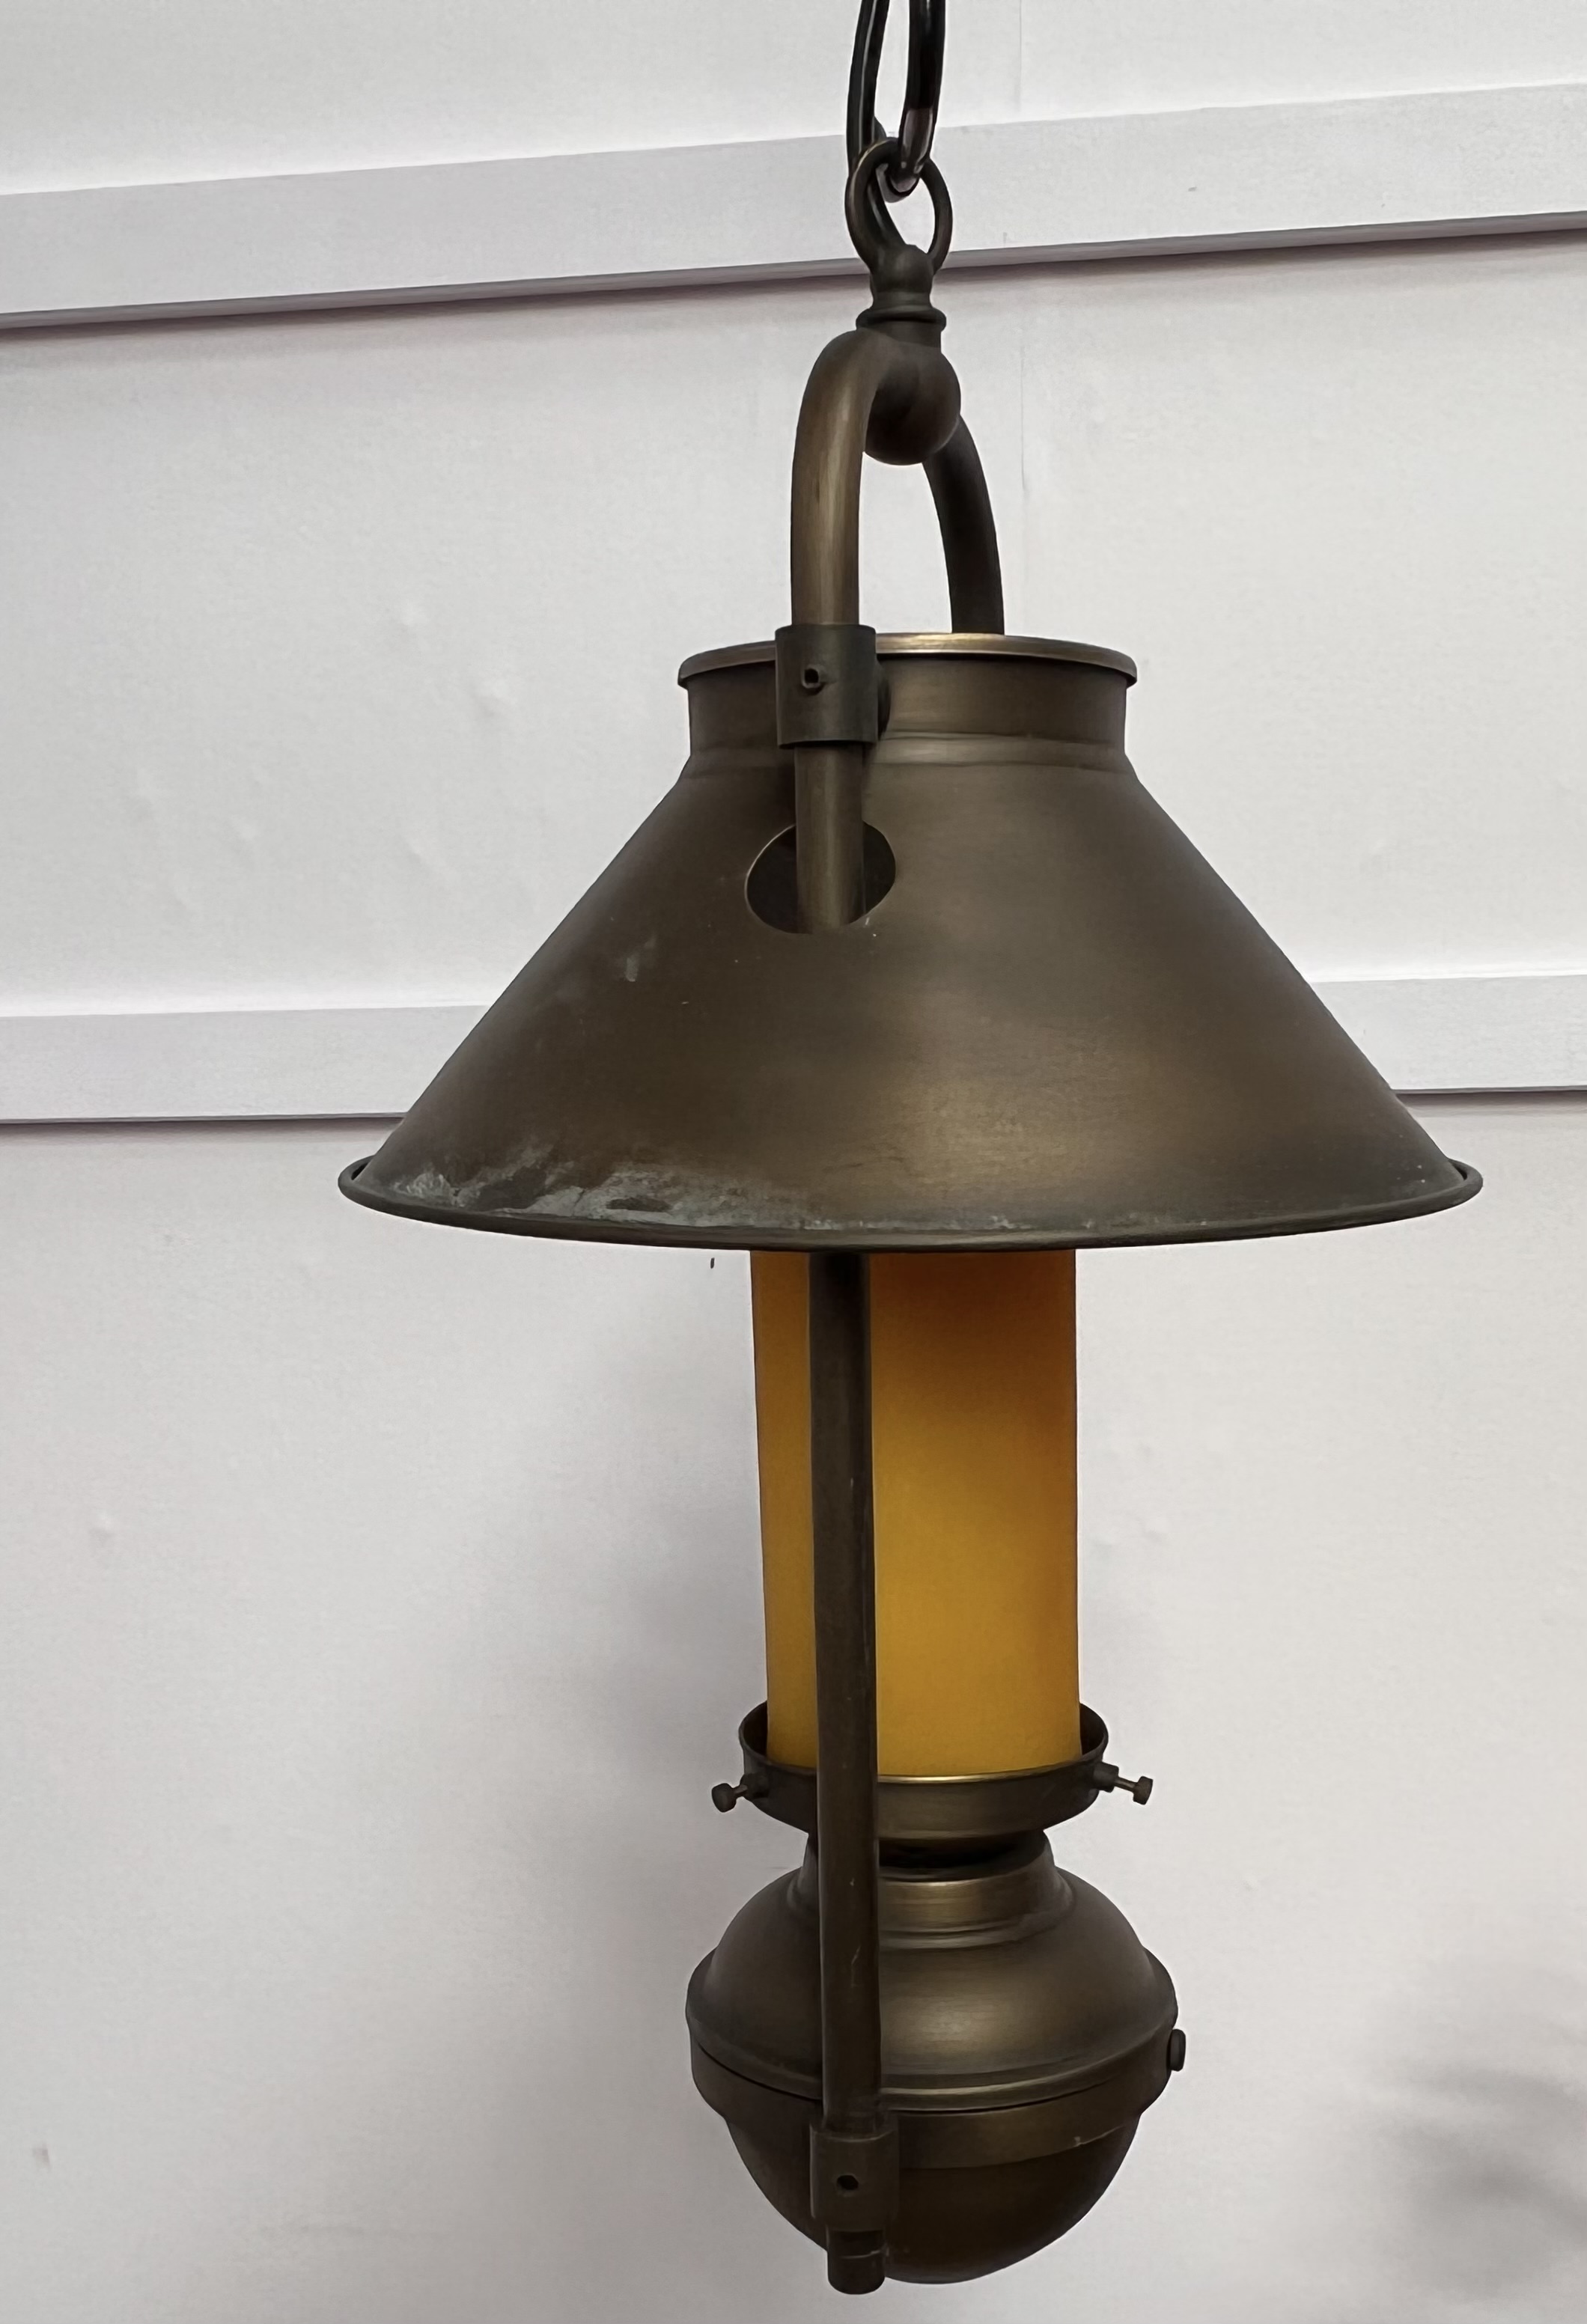 Metal lantern light. {H 47cm x Dia 25cm}.